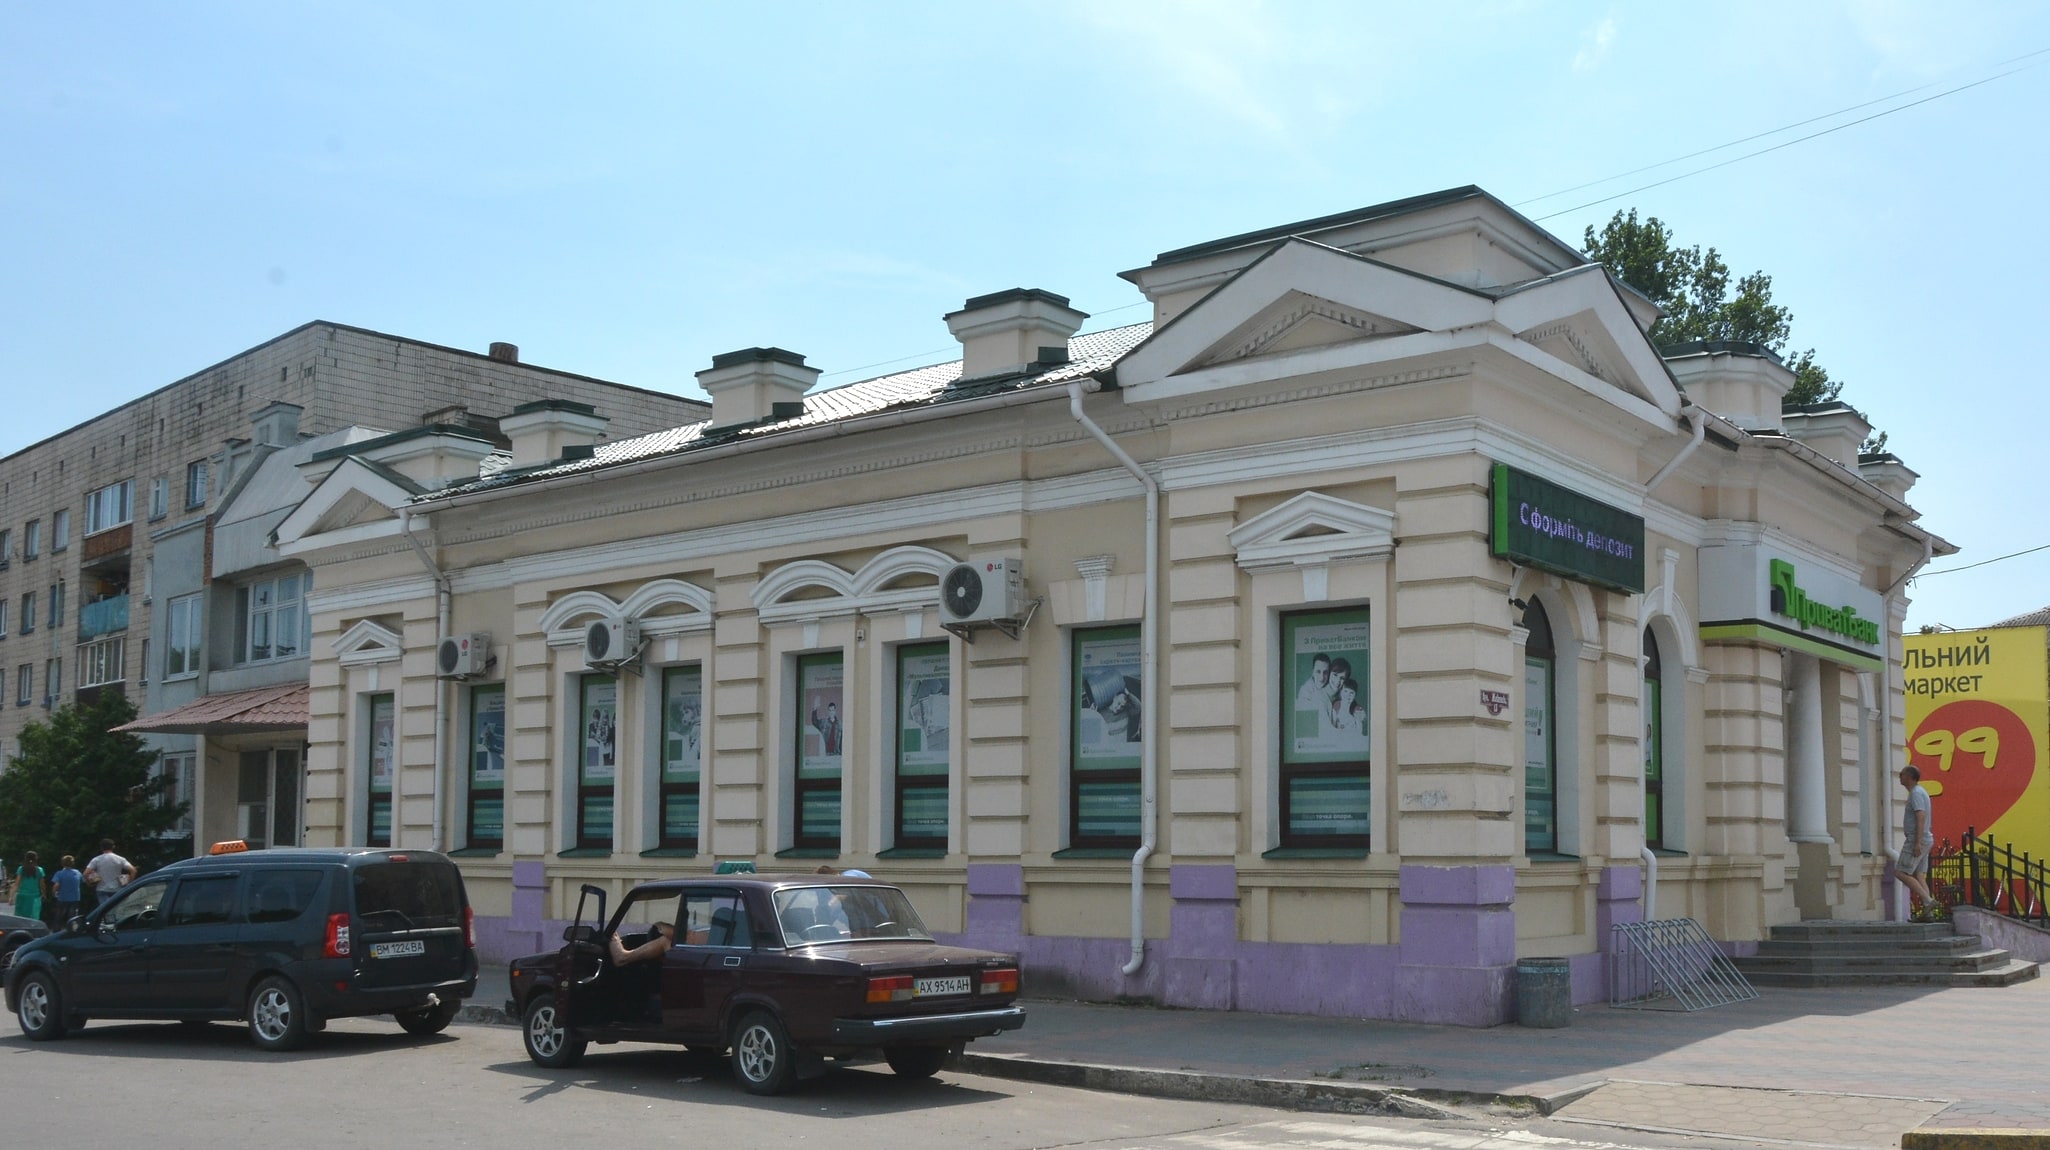 Ochtyrka, Ukraina